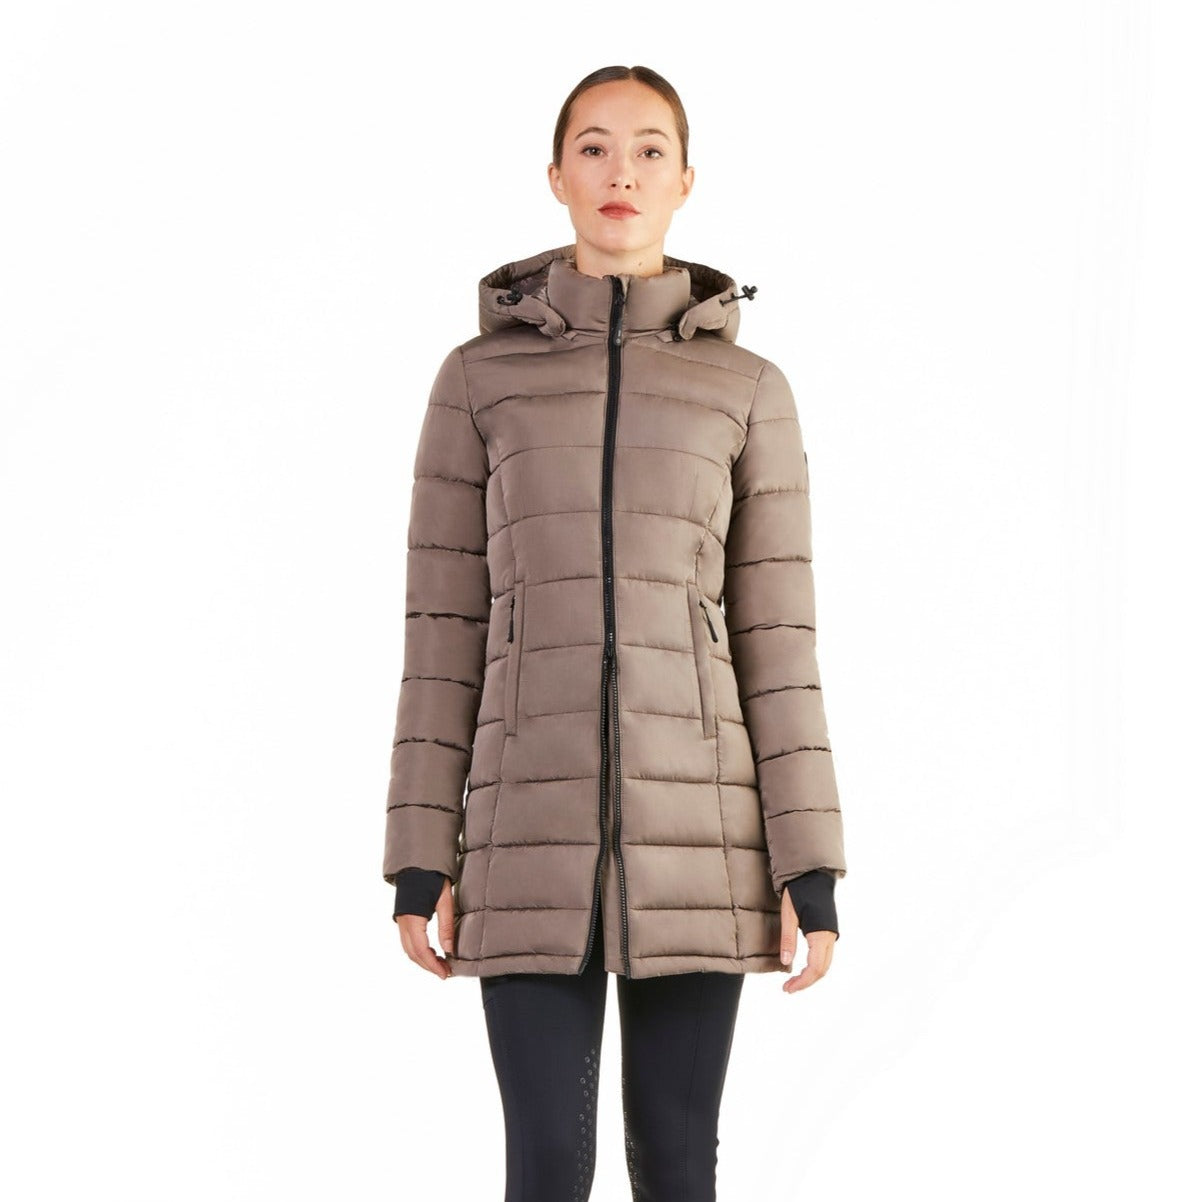 Fashionable equestrian winter jacket for women